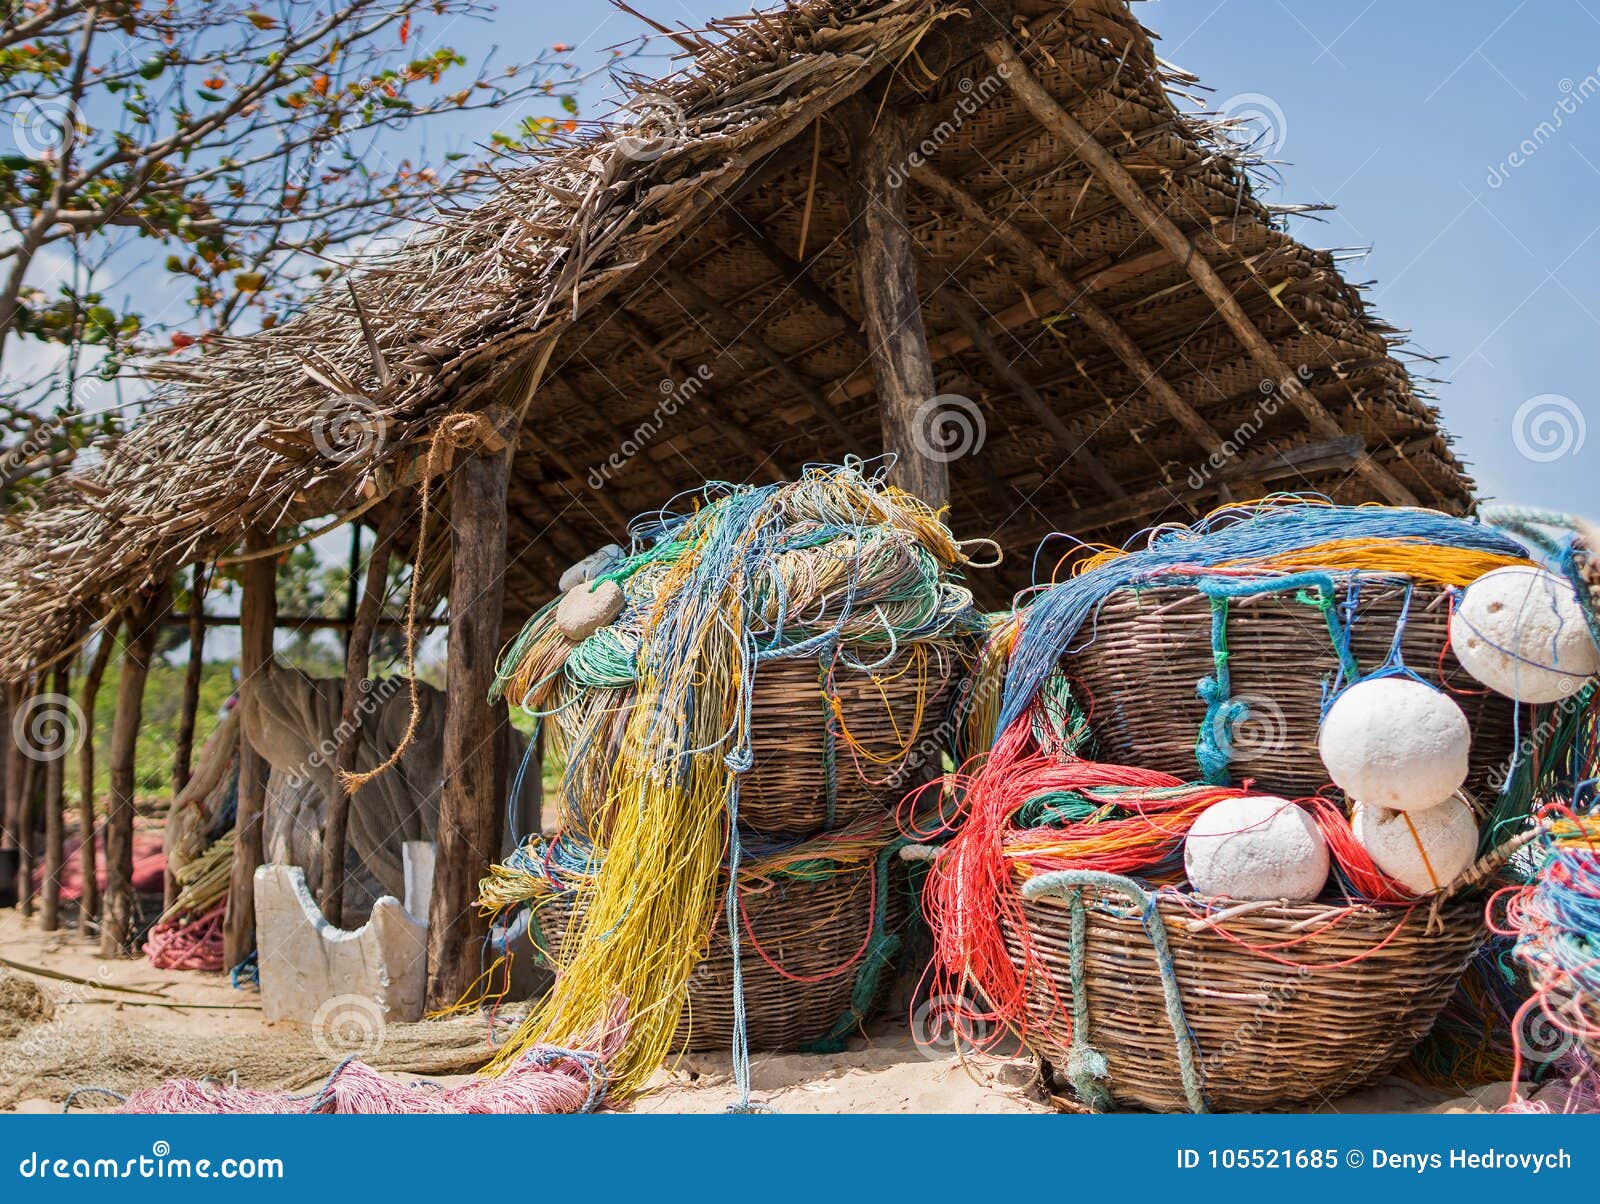 https://thumbs.dreamstime.com/z/small-fishing-hut-beach-color-net-floats-nylon-rope-used-industry-big-wicker-baskets-105521685.jpg